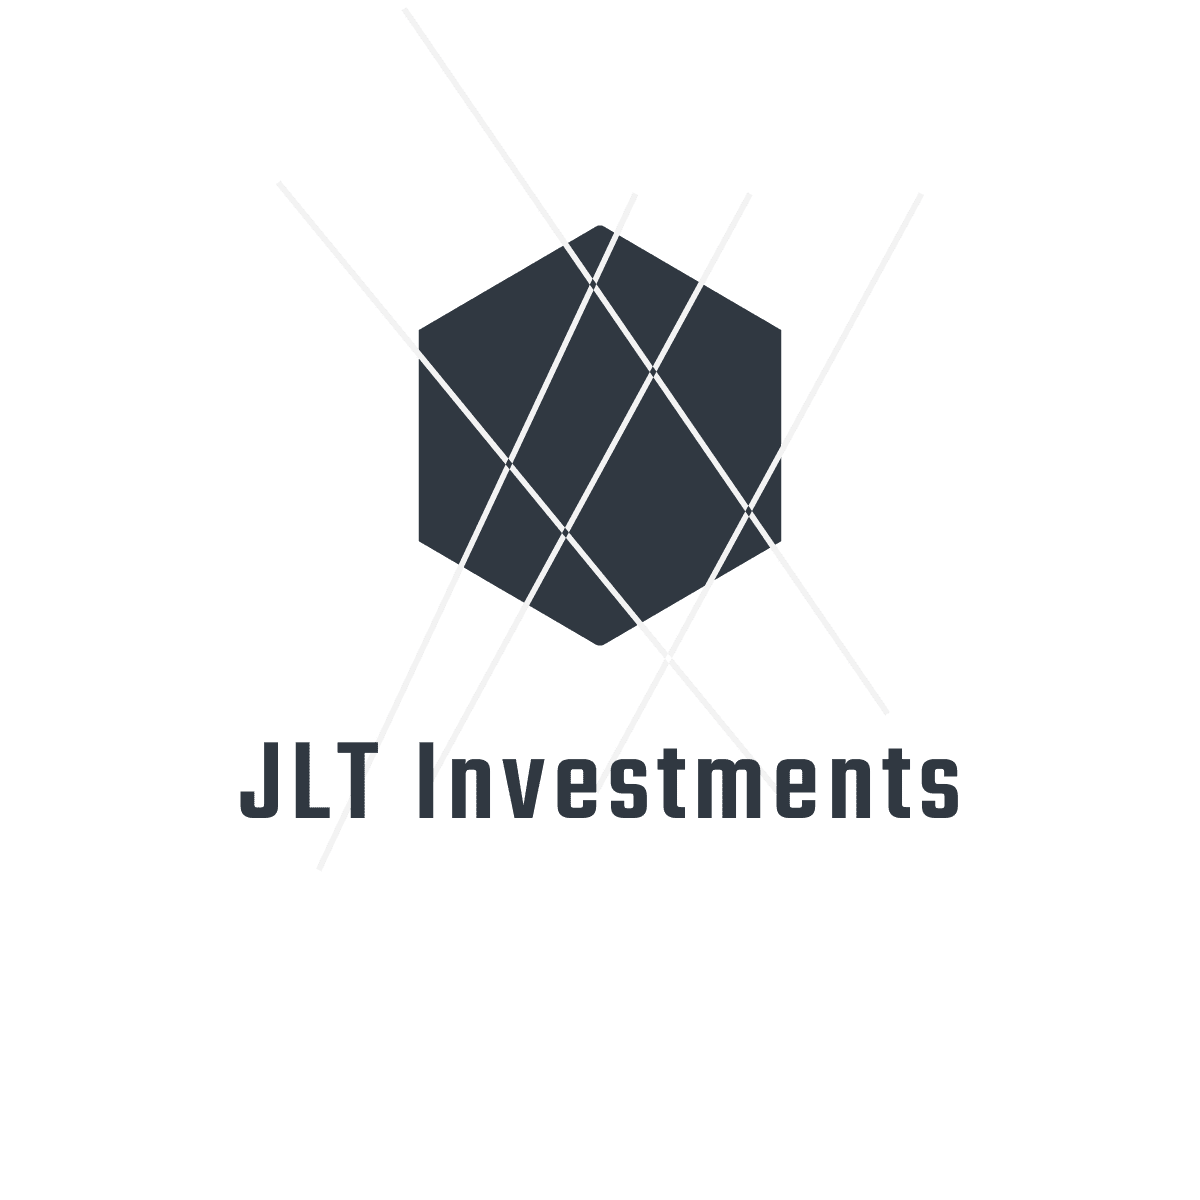 JLT Investments 